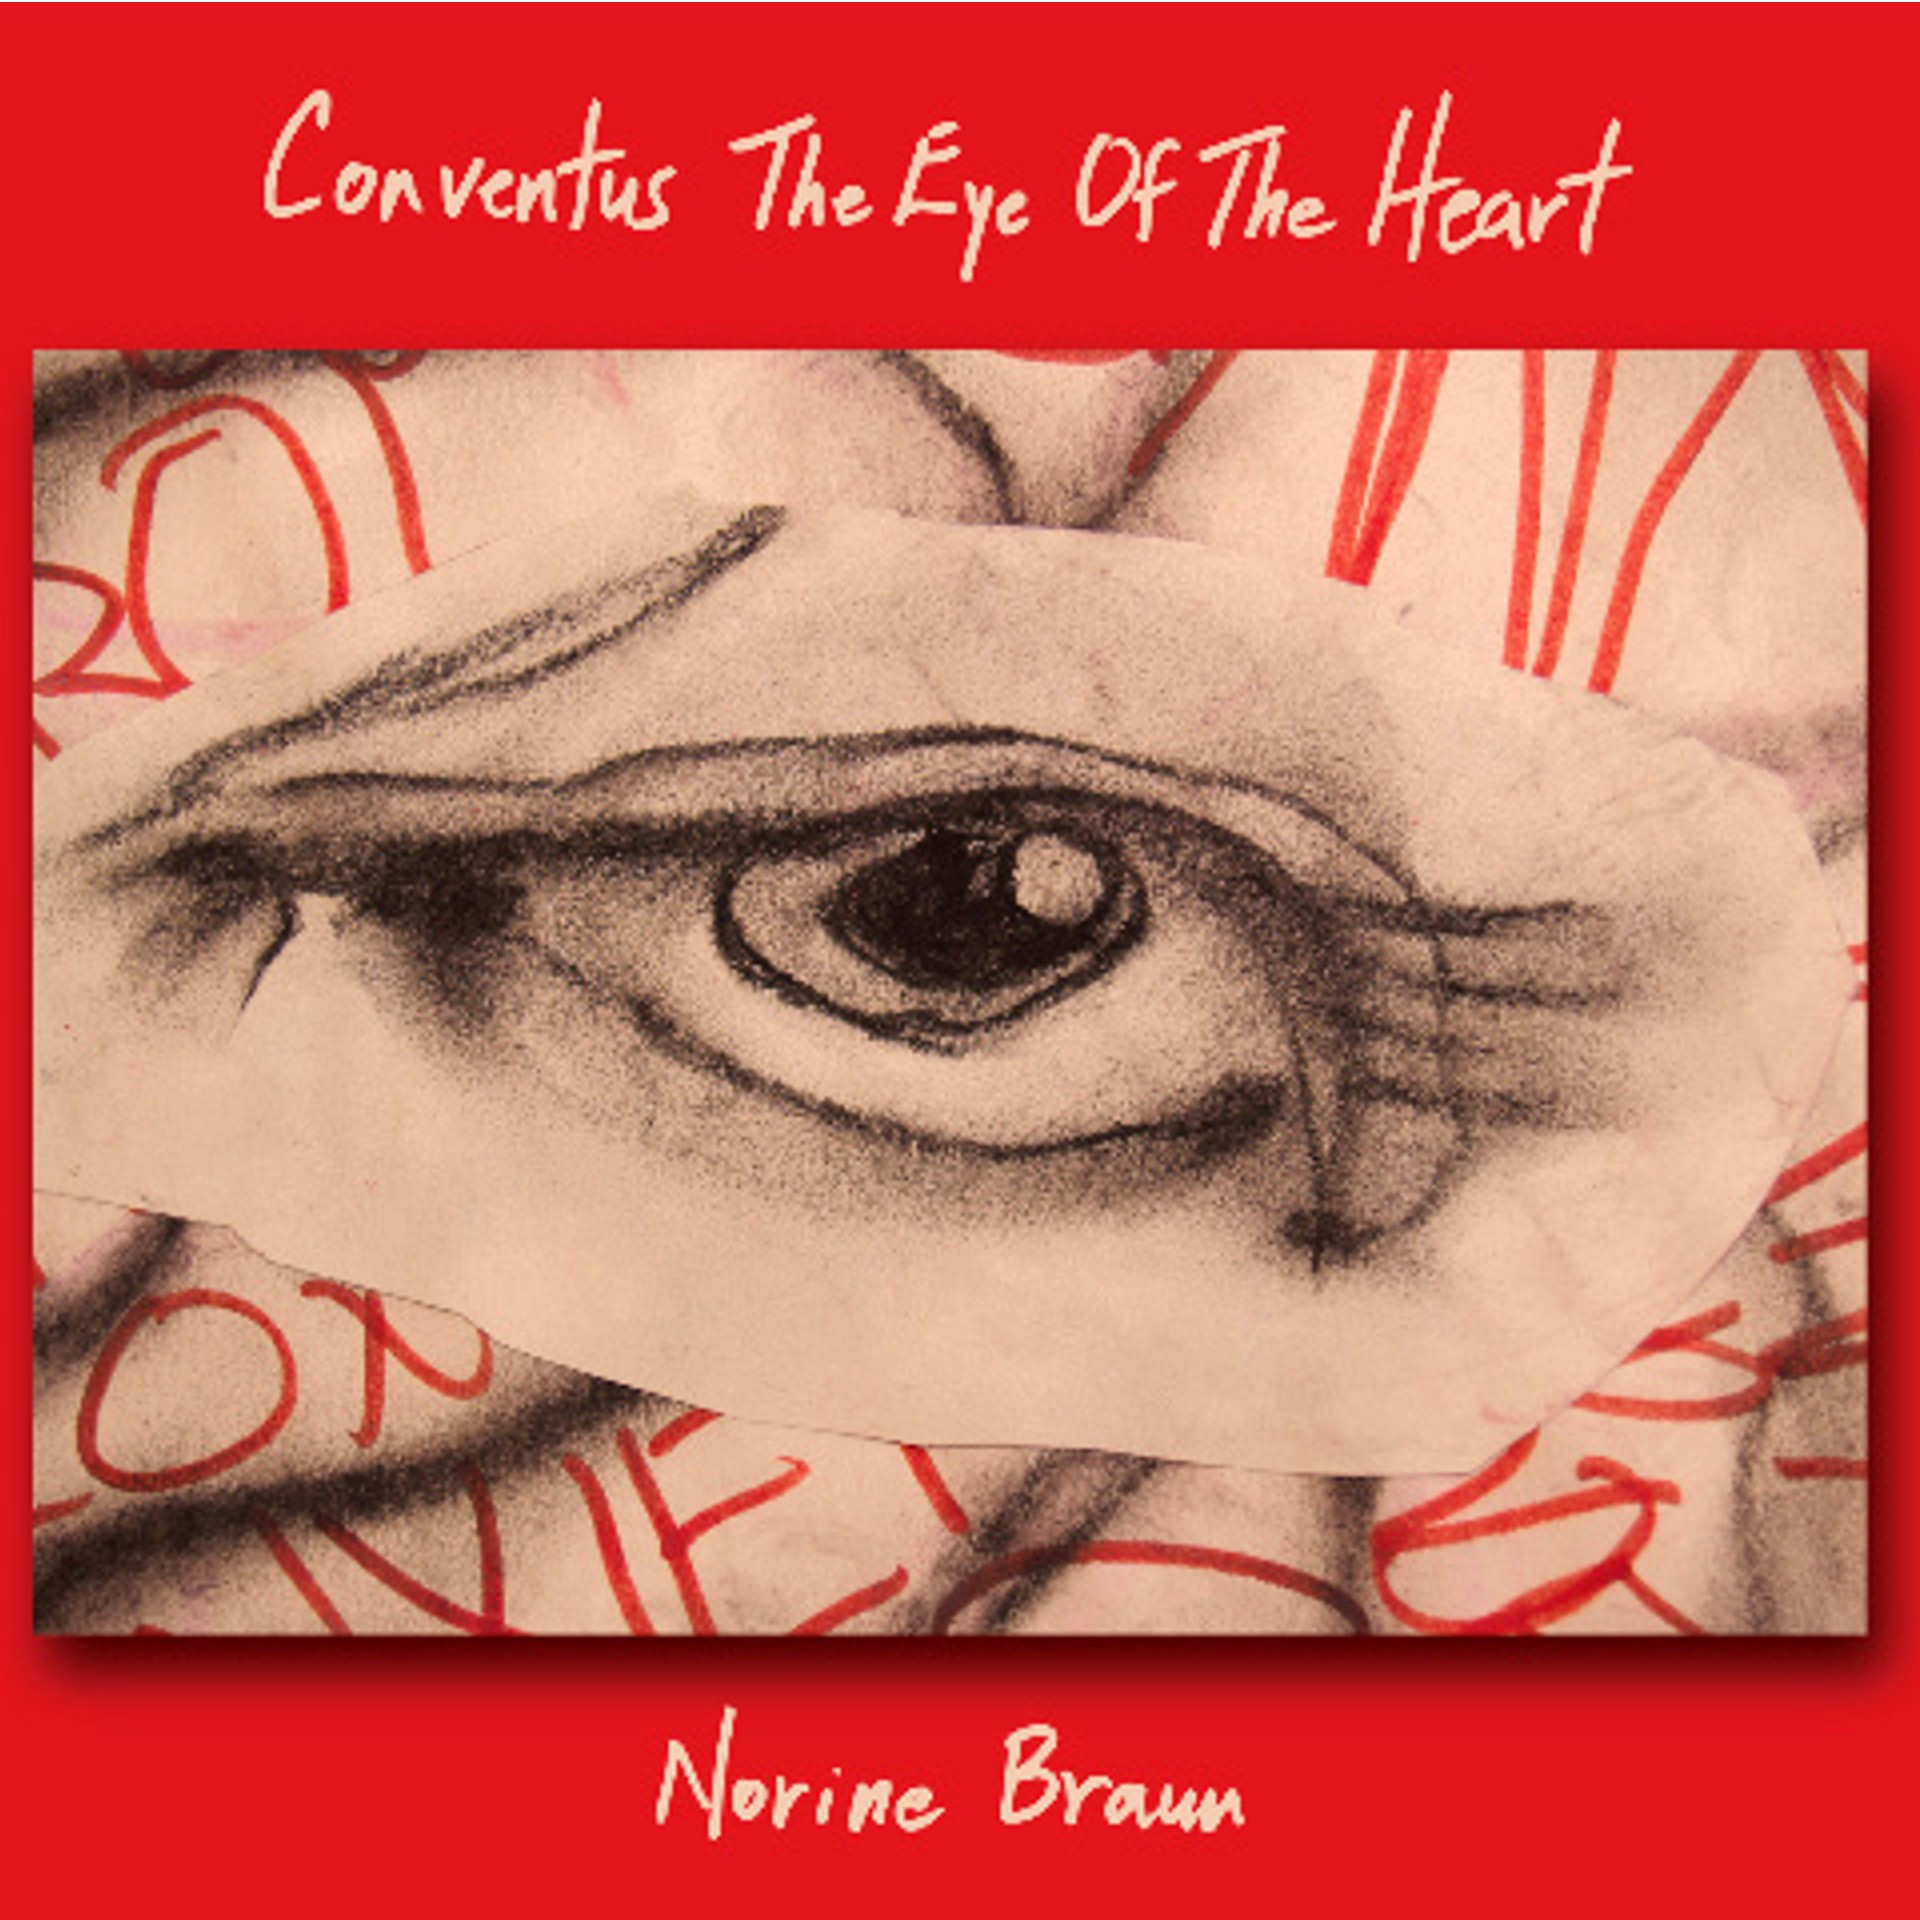 Norine Braun "Conventus The Eye of the Heart"